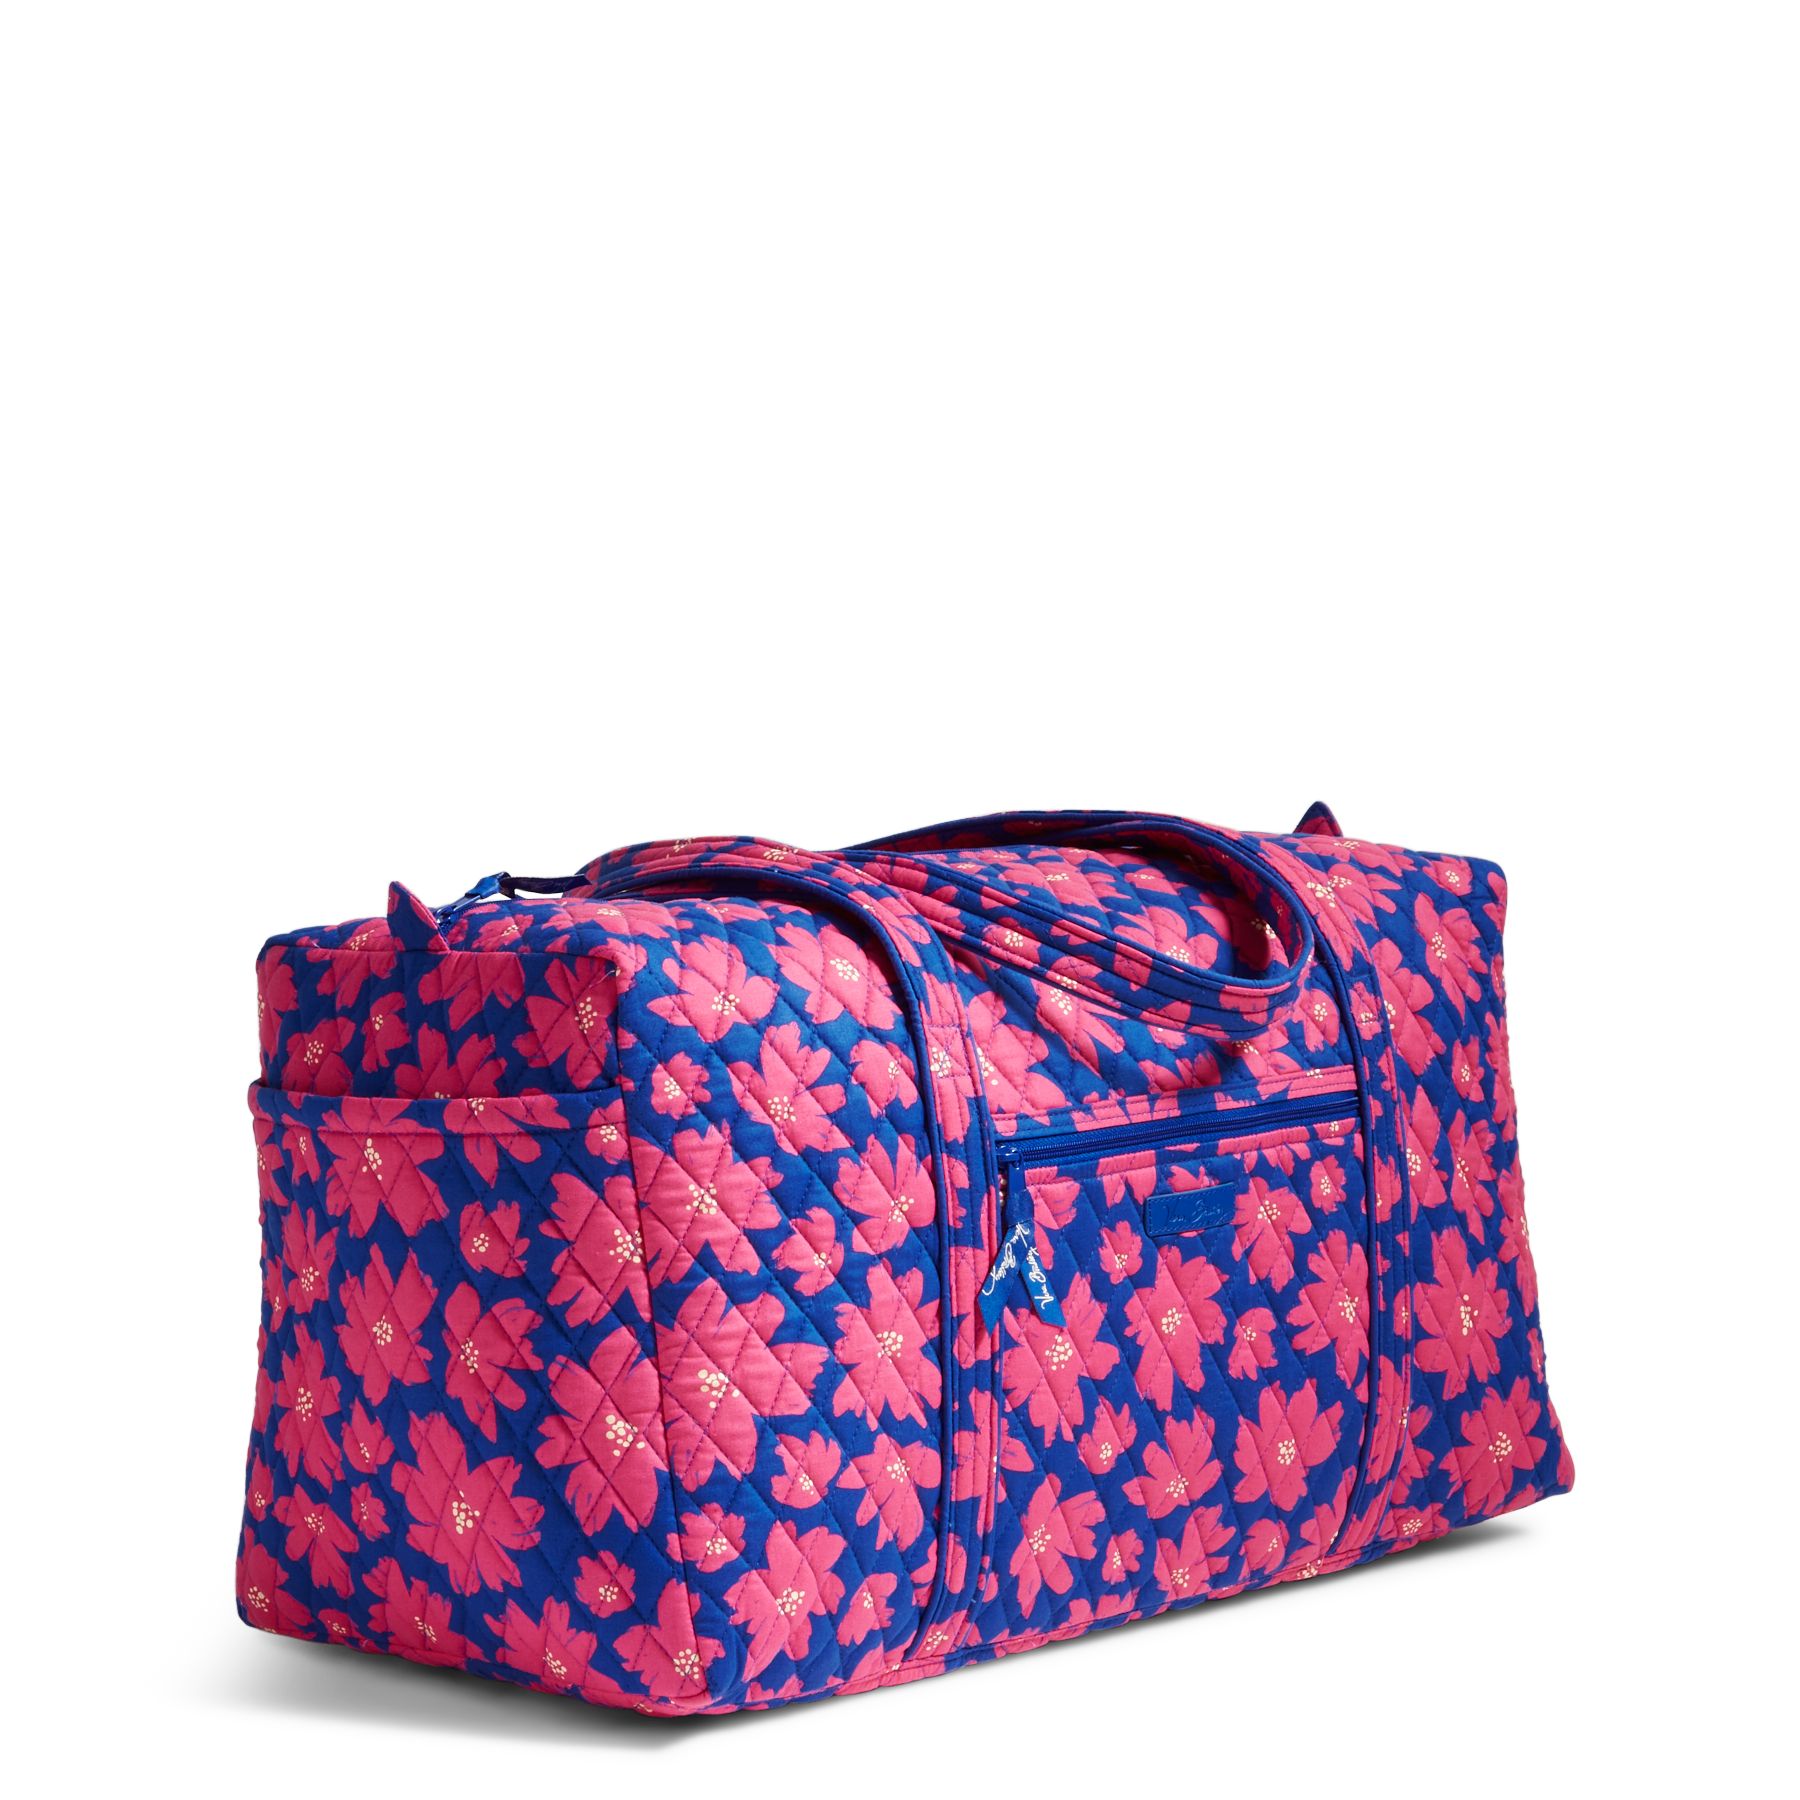 Vera Bradley Large Duffel Travel Bag | eBay